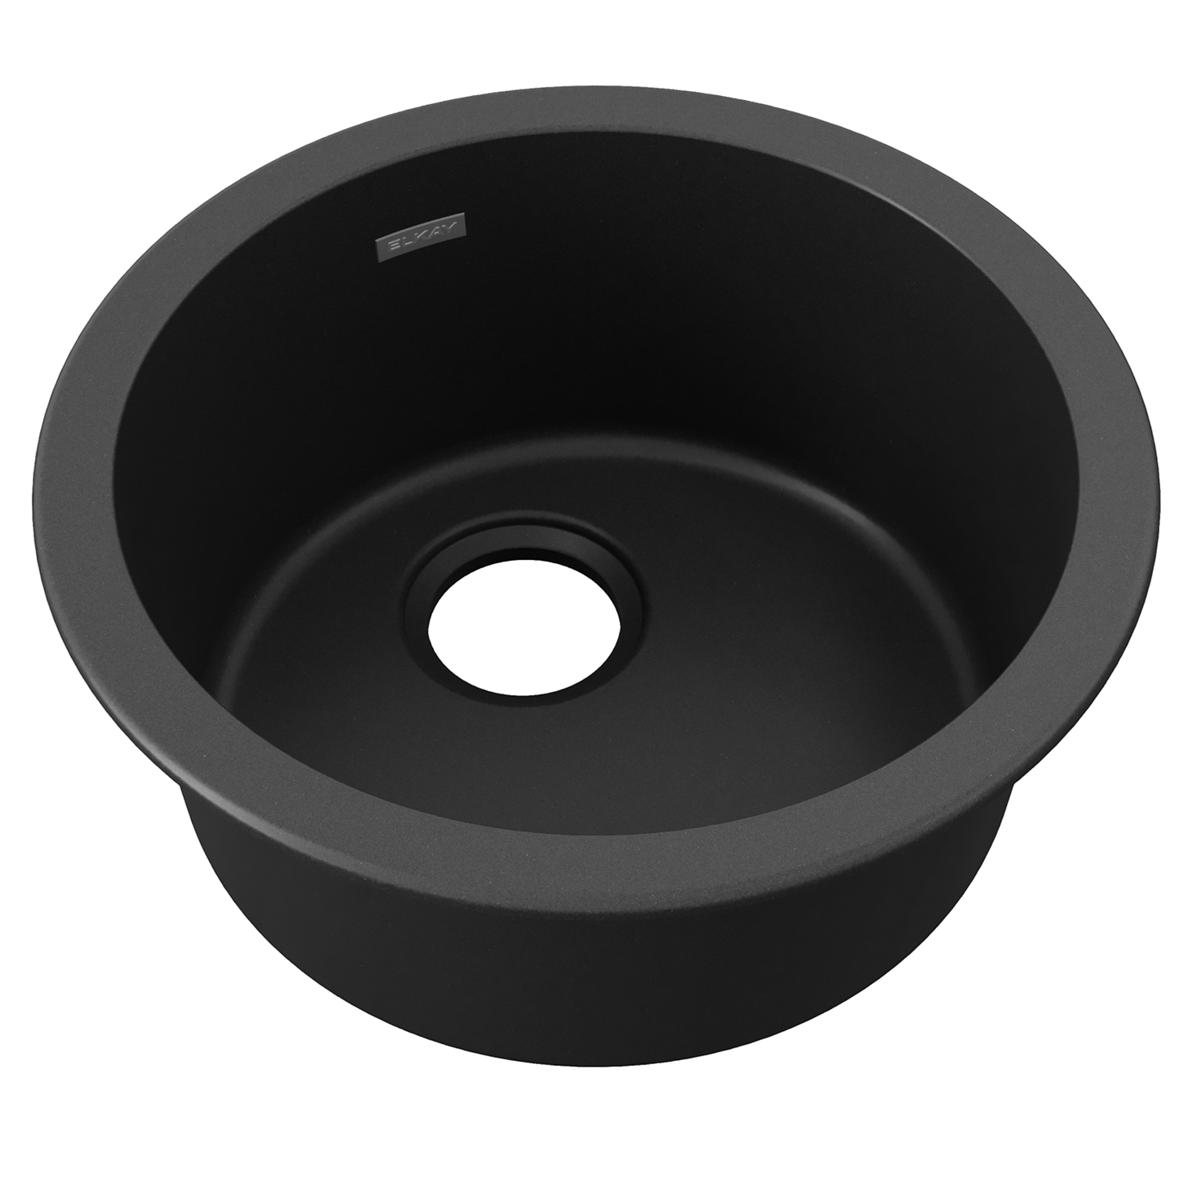 black single bowl dual mount bar sink